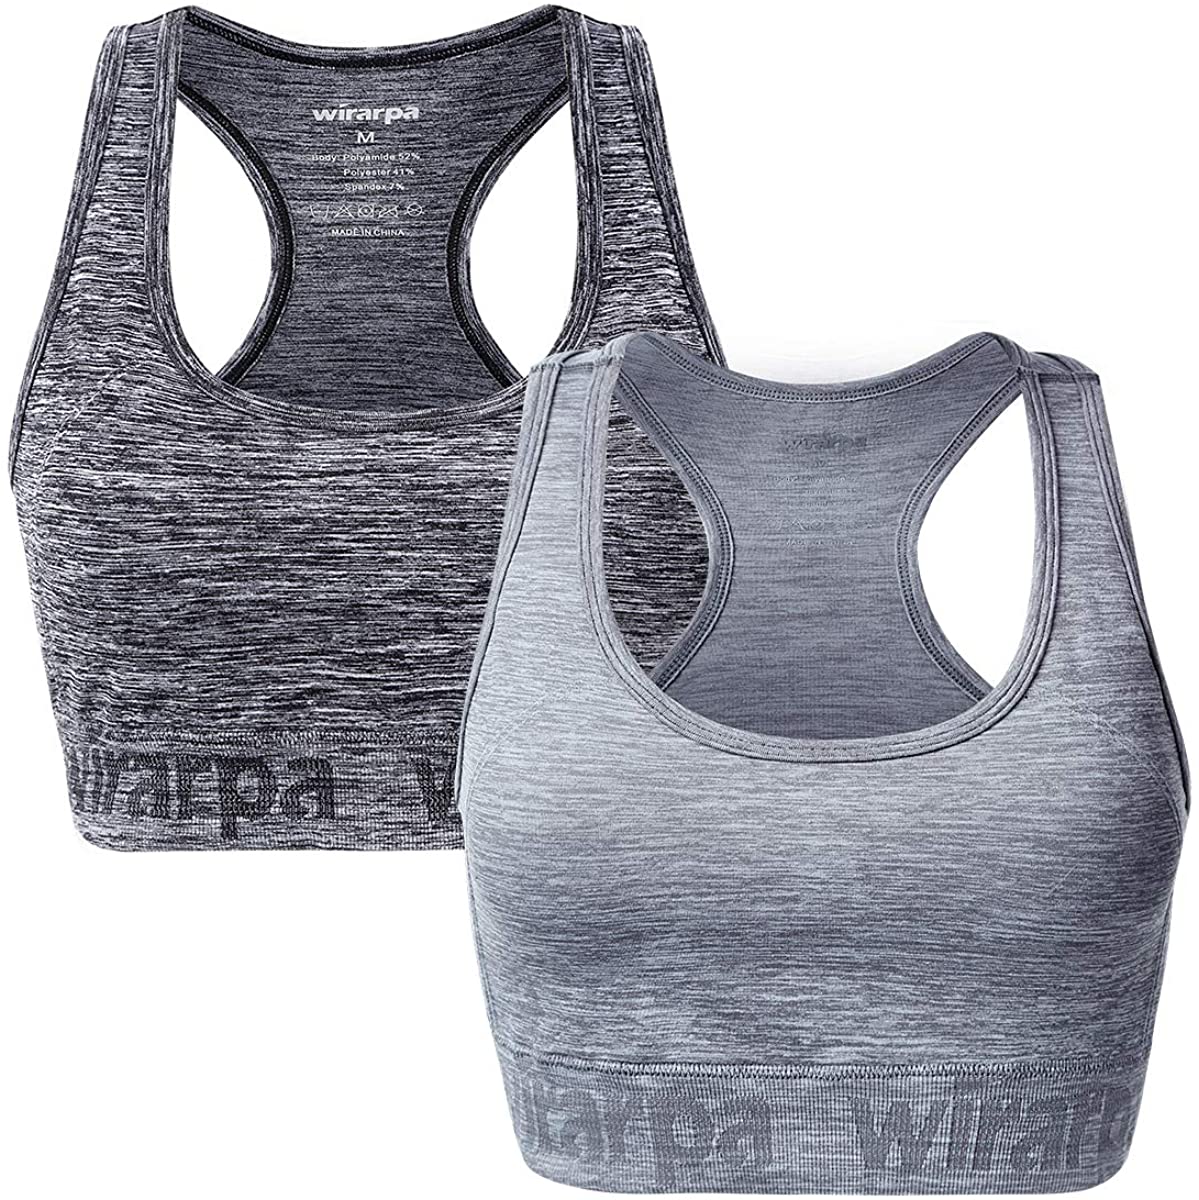 Price:$16.99 wirarpa Sports Bra for Women Medium Impact Yoga Workout Bra Padded - Ladies Gym Activewear Bra Multipack at Amazon Women’s Clothing store